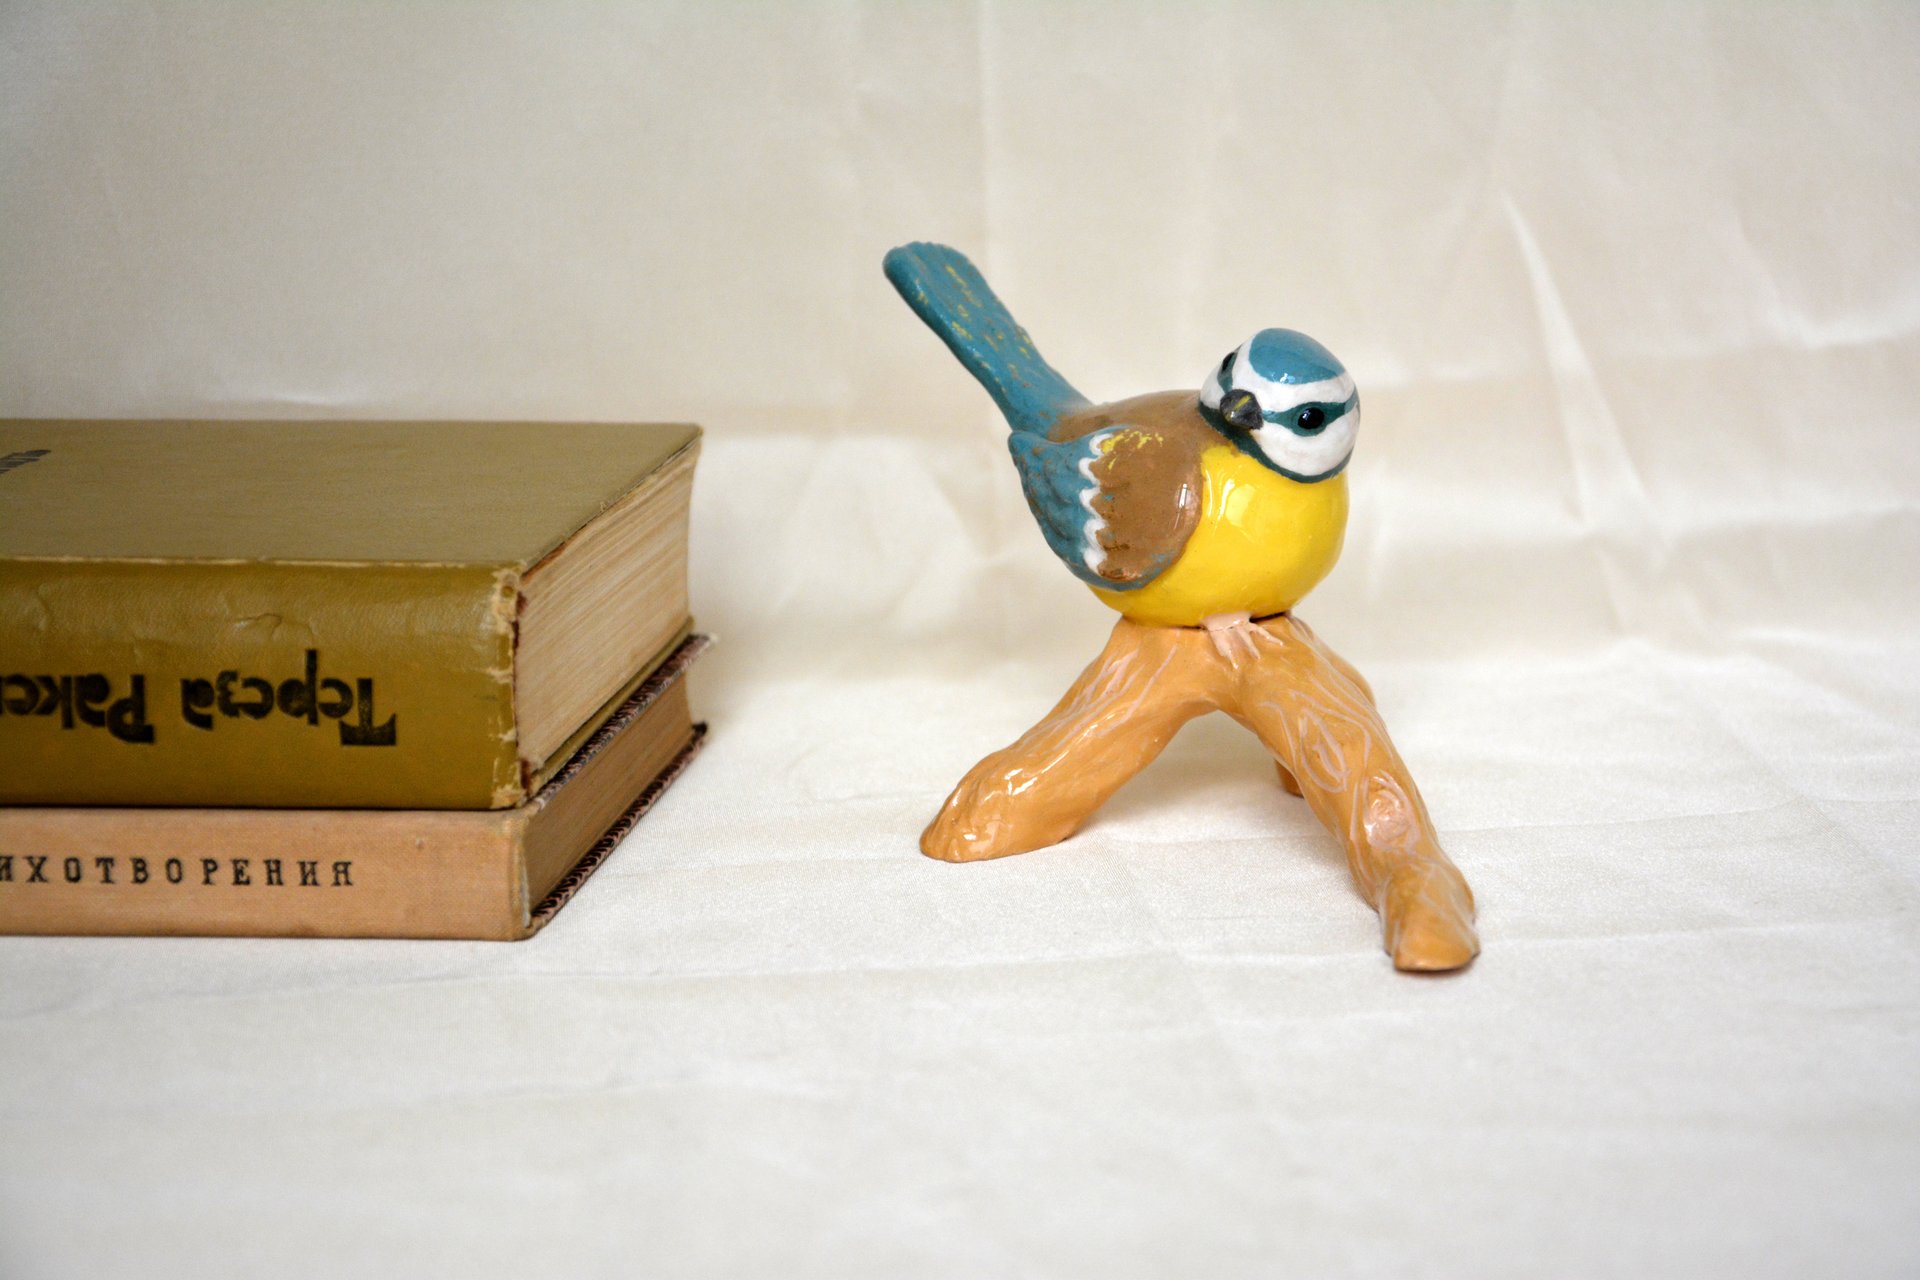 Birdie — Tomtit - Animals and birds, height - 10 cm, photo 2 of 2.